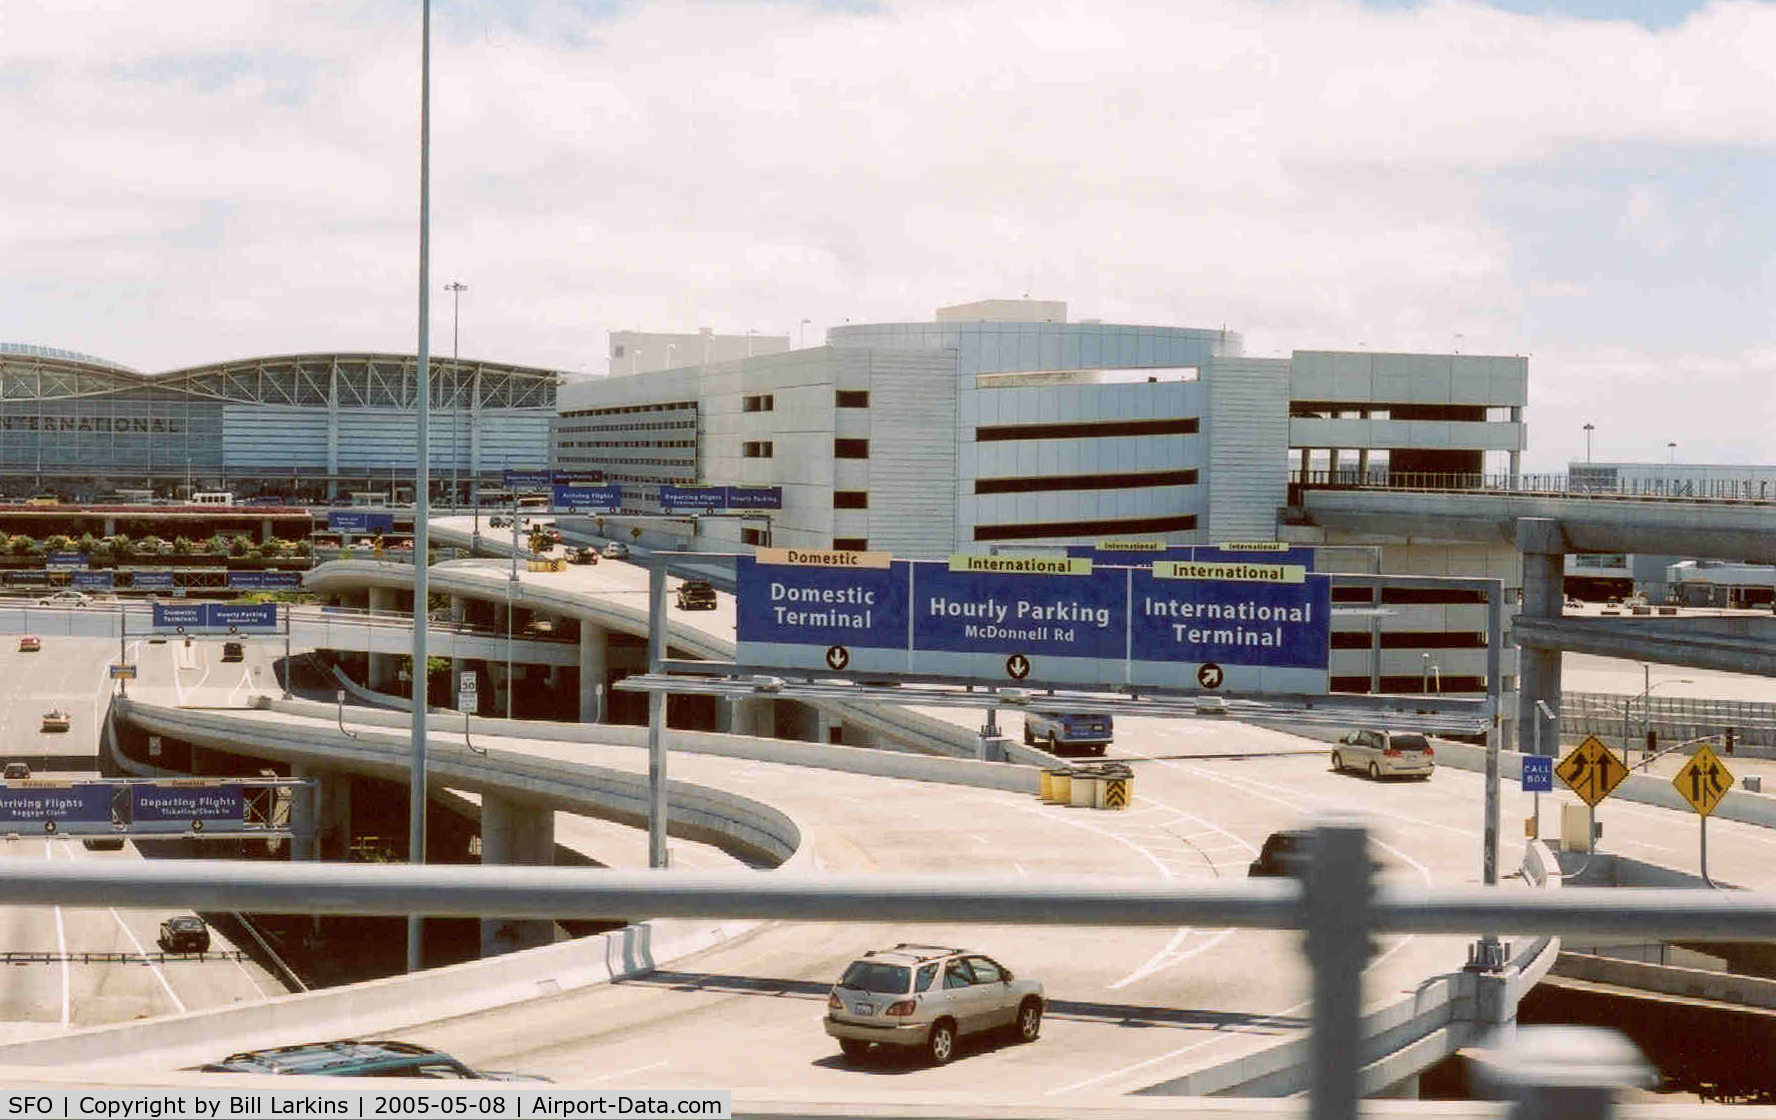 San Francisco International Airport (SFO) - International Terminal on left and Garage on right